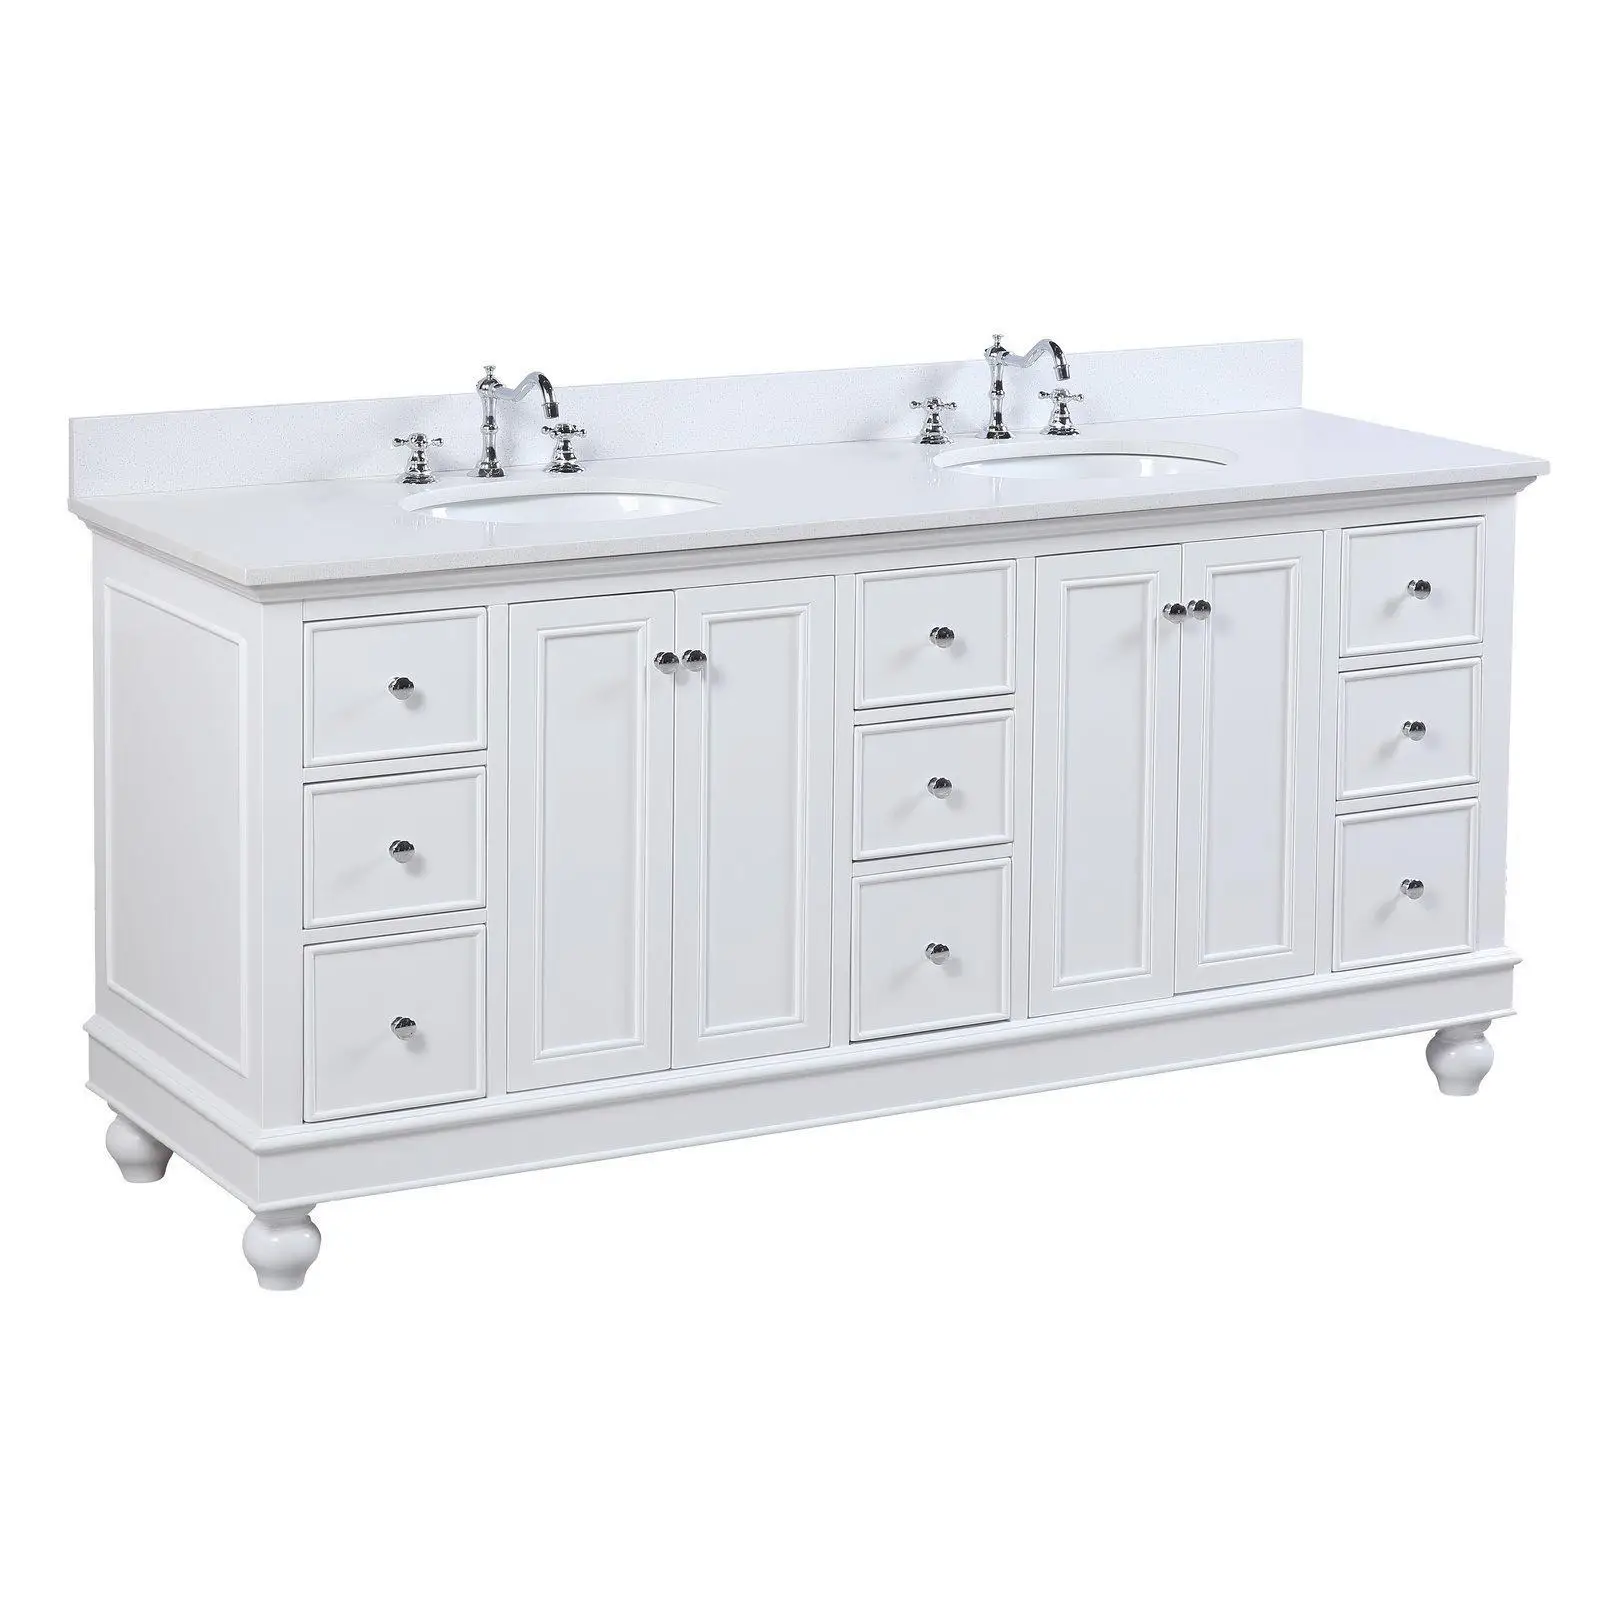 Ik017 Modern White American Solid Wood Bathroom Cabinet Double